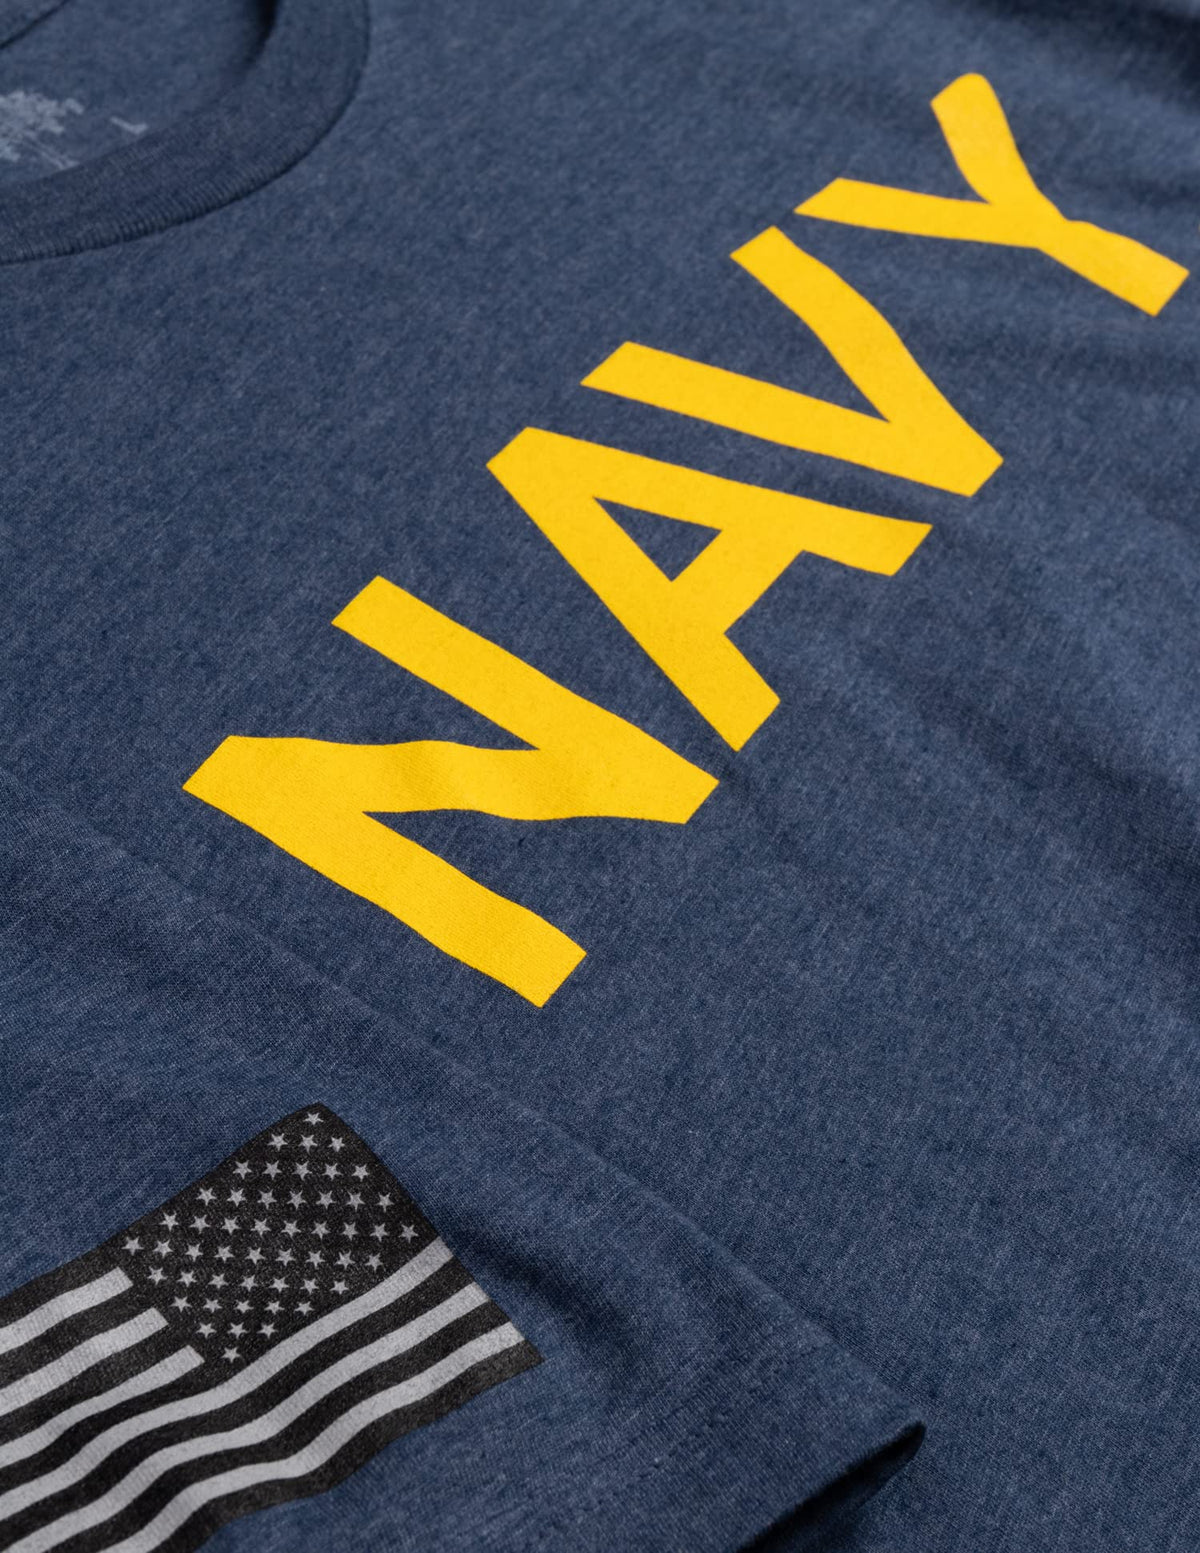 USS De Wert, FFG-45 | U.S. Navy Sailor Veteran USN United States Naval T-shirt for Men Women